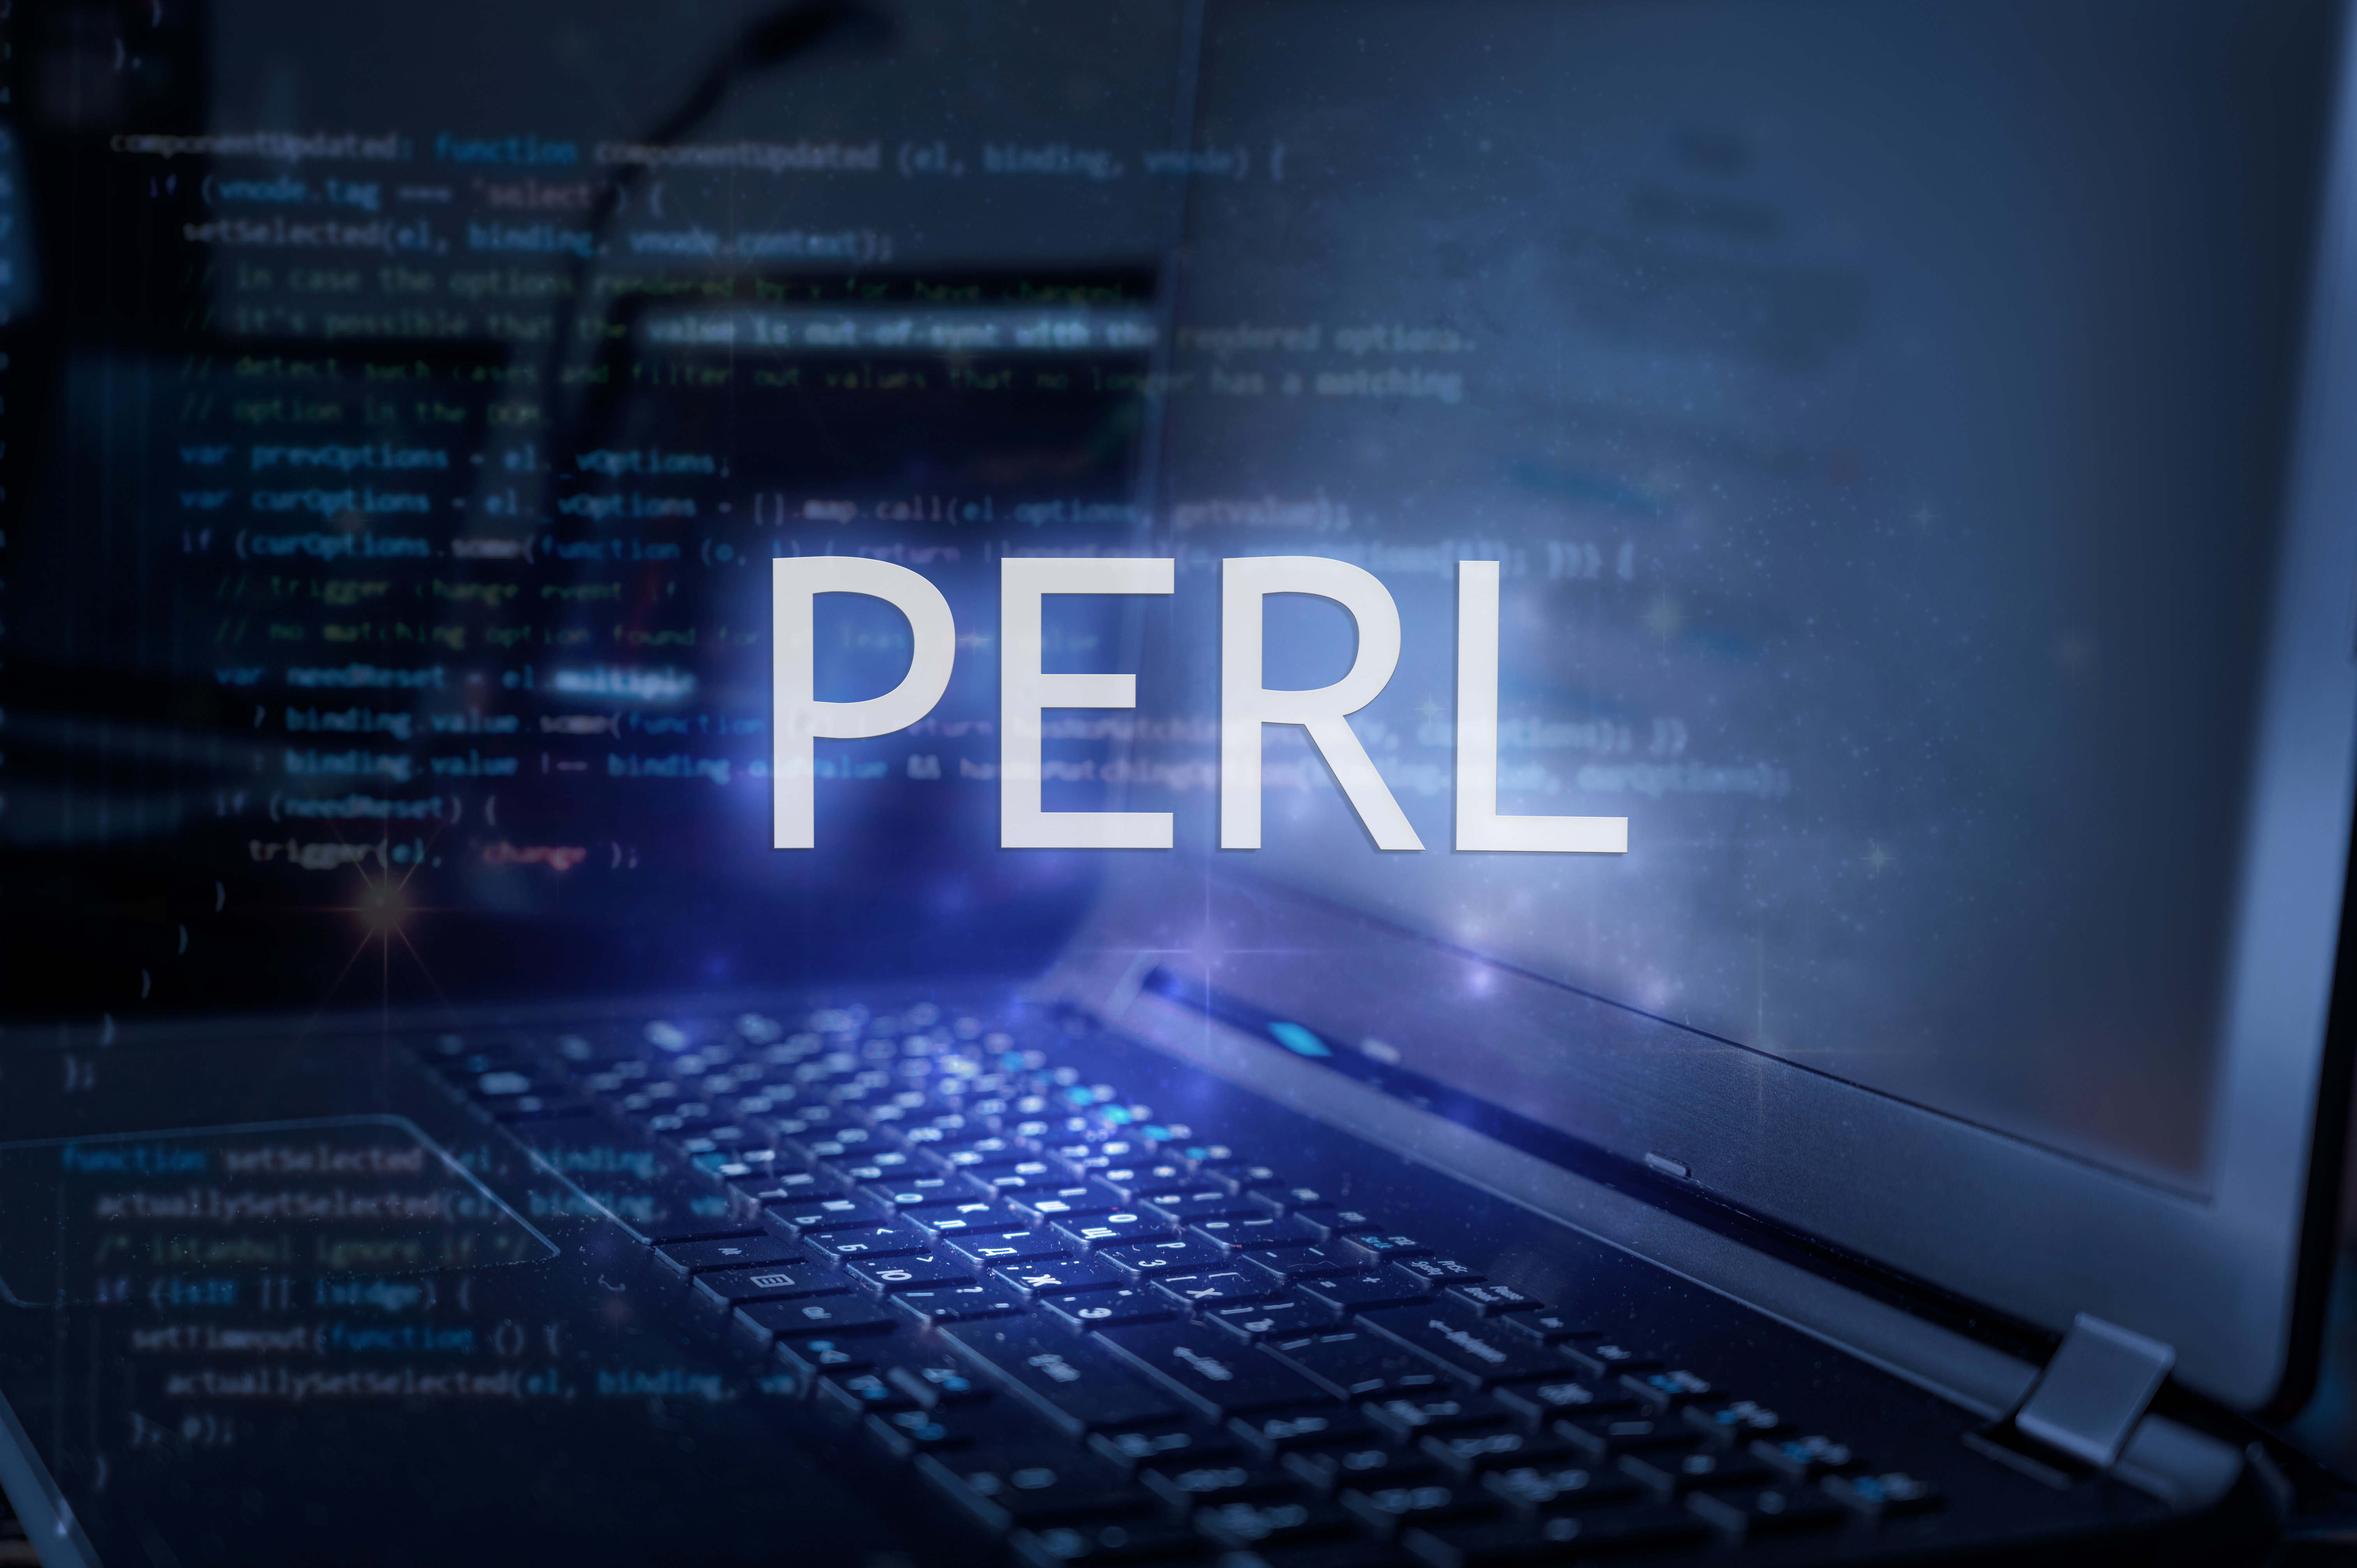 L'inscription Perl - langage de programmation - avec un ordinateur portable en toile de fonds. © Maria Vonotna - AdobeStock